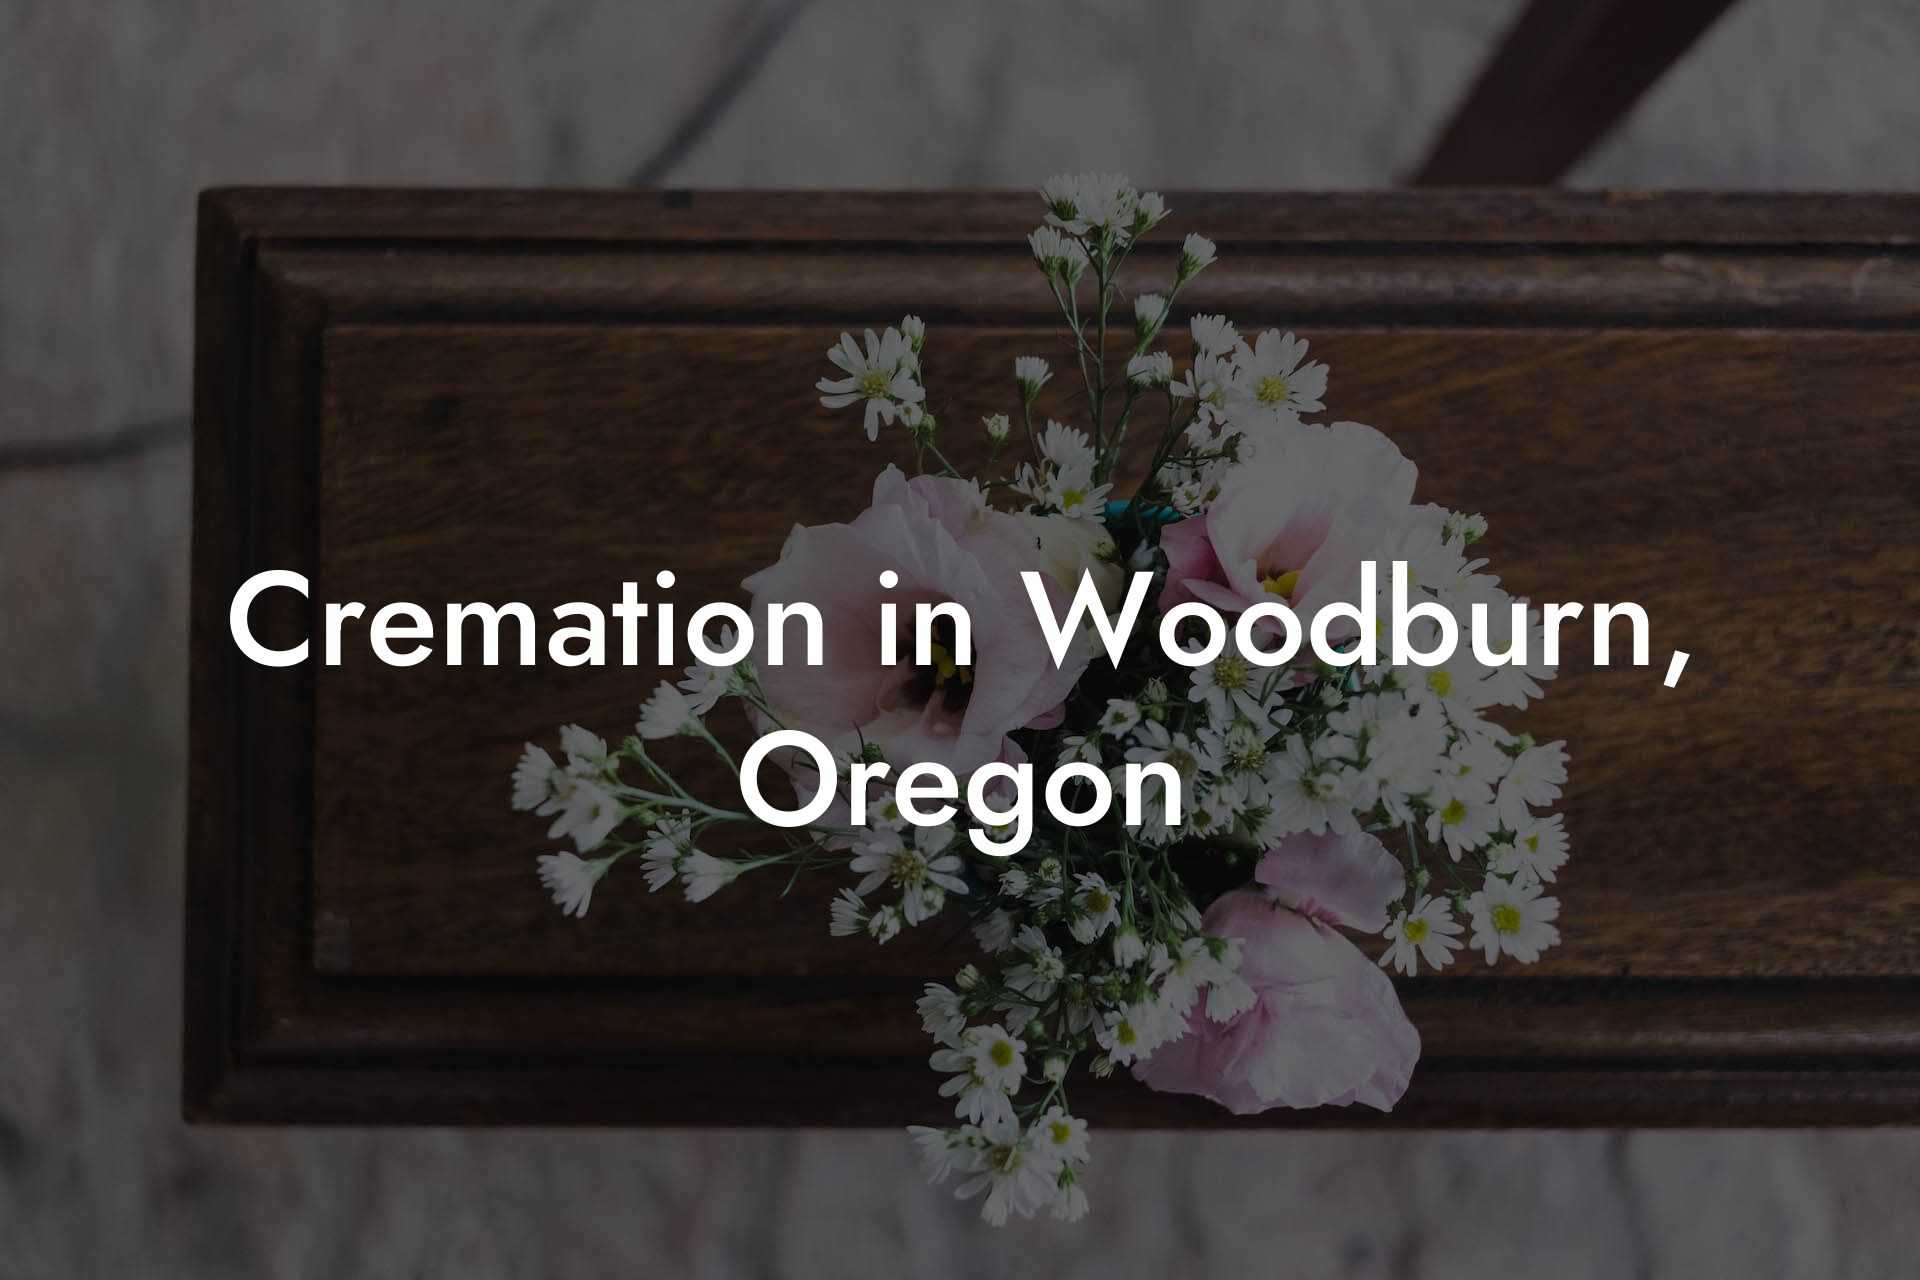 Cremation in Woodburn, Oregon